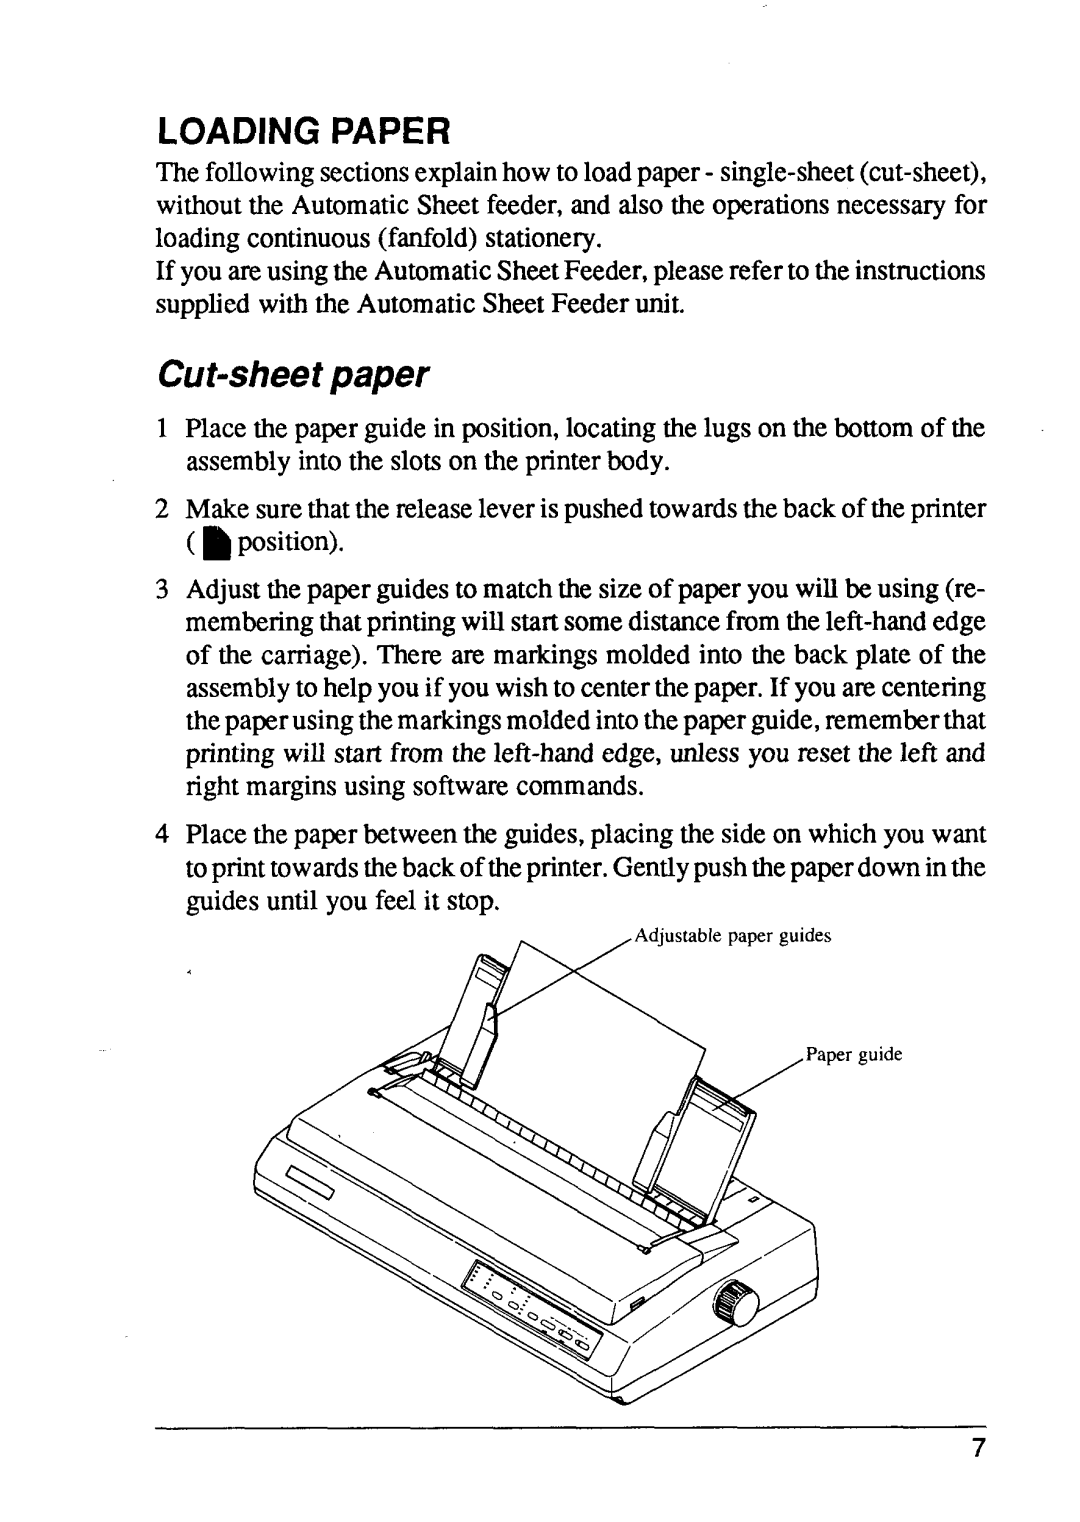 Star Micronics XB24-15, XB24-10 user manual Loading Paper, Cut-sheet paper 